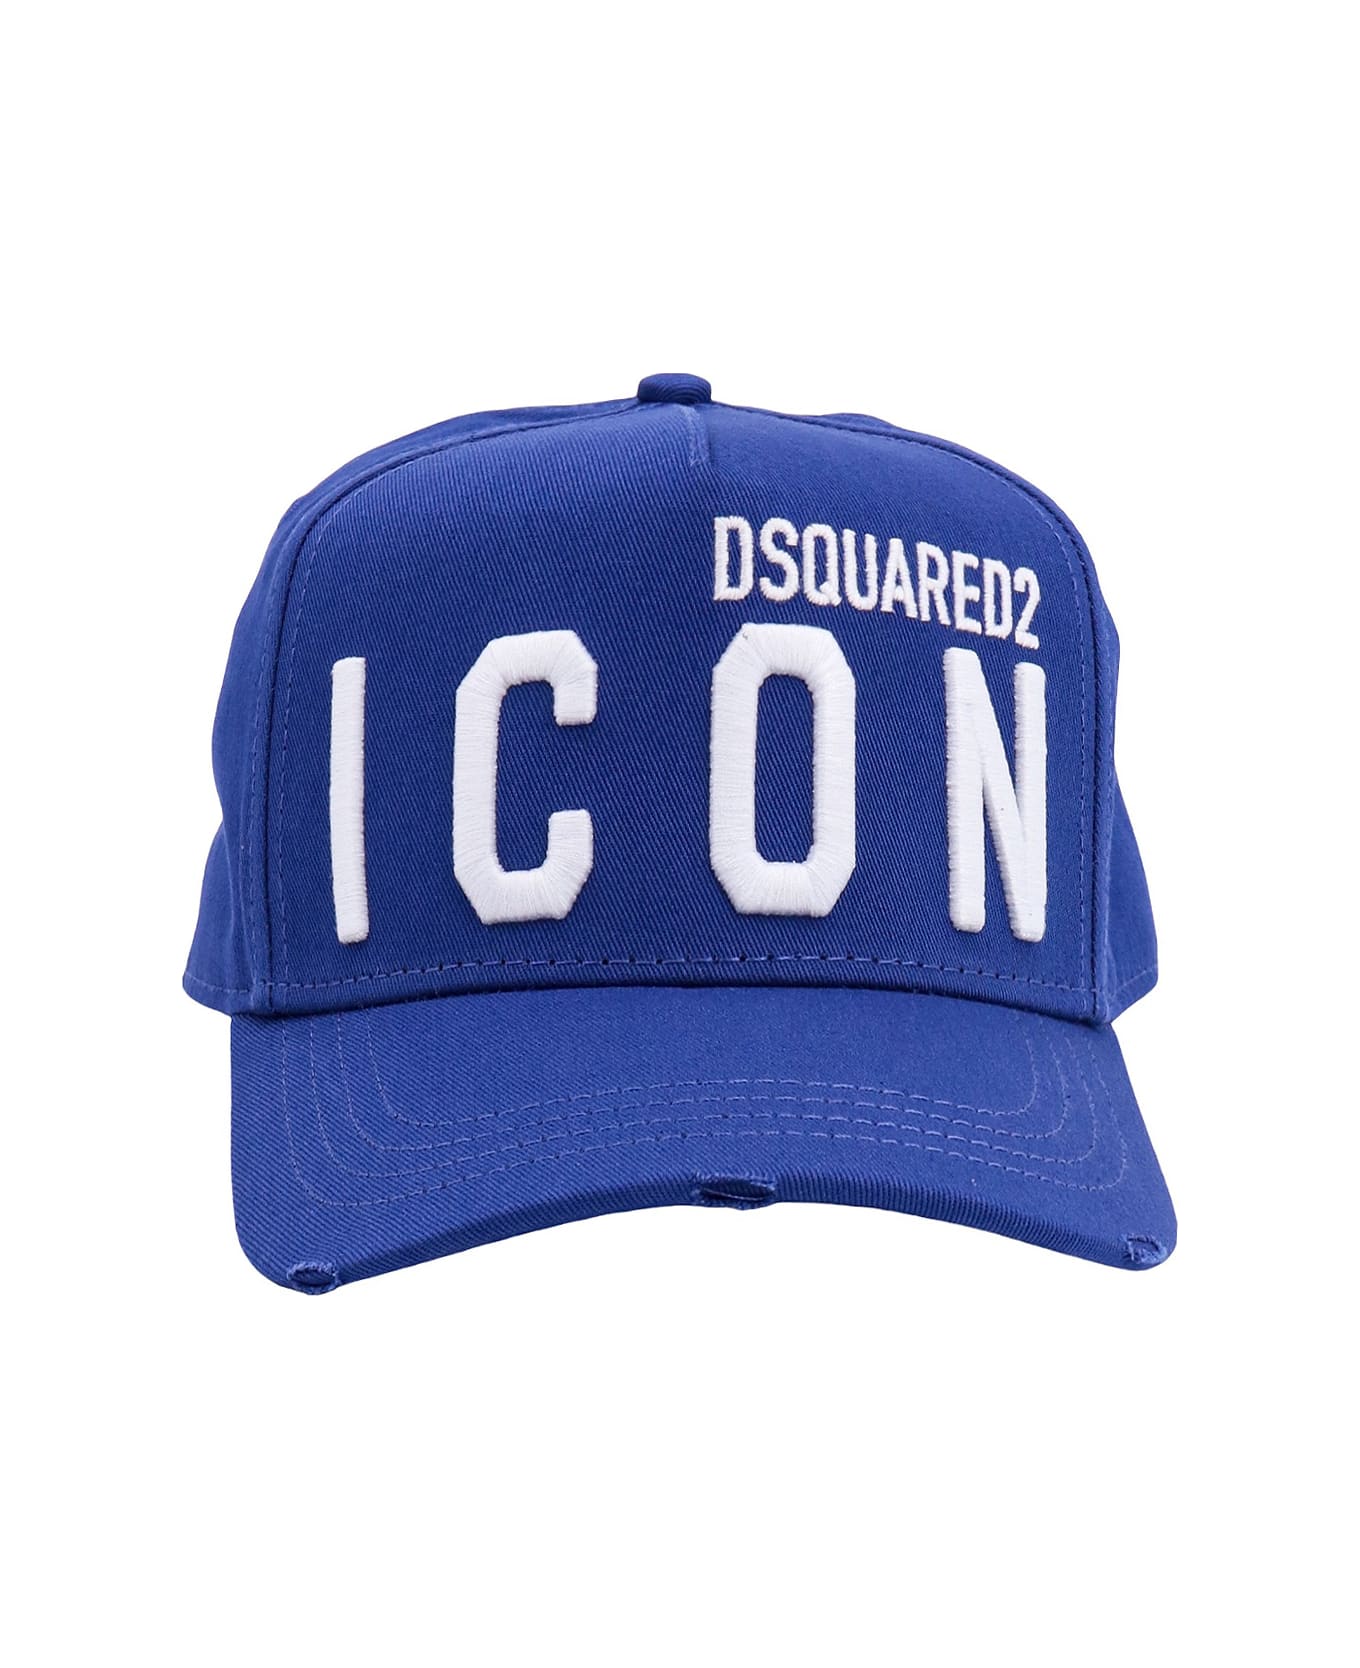 Dsquared2 Logo Baseball Cap - Blue